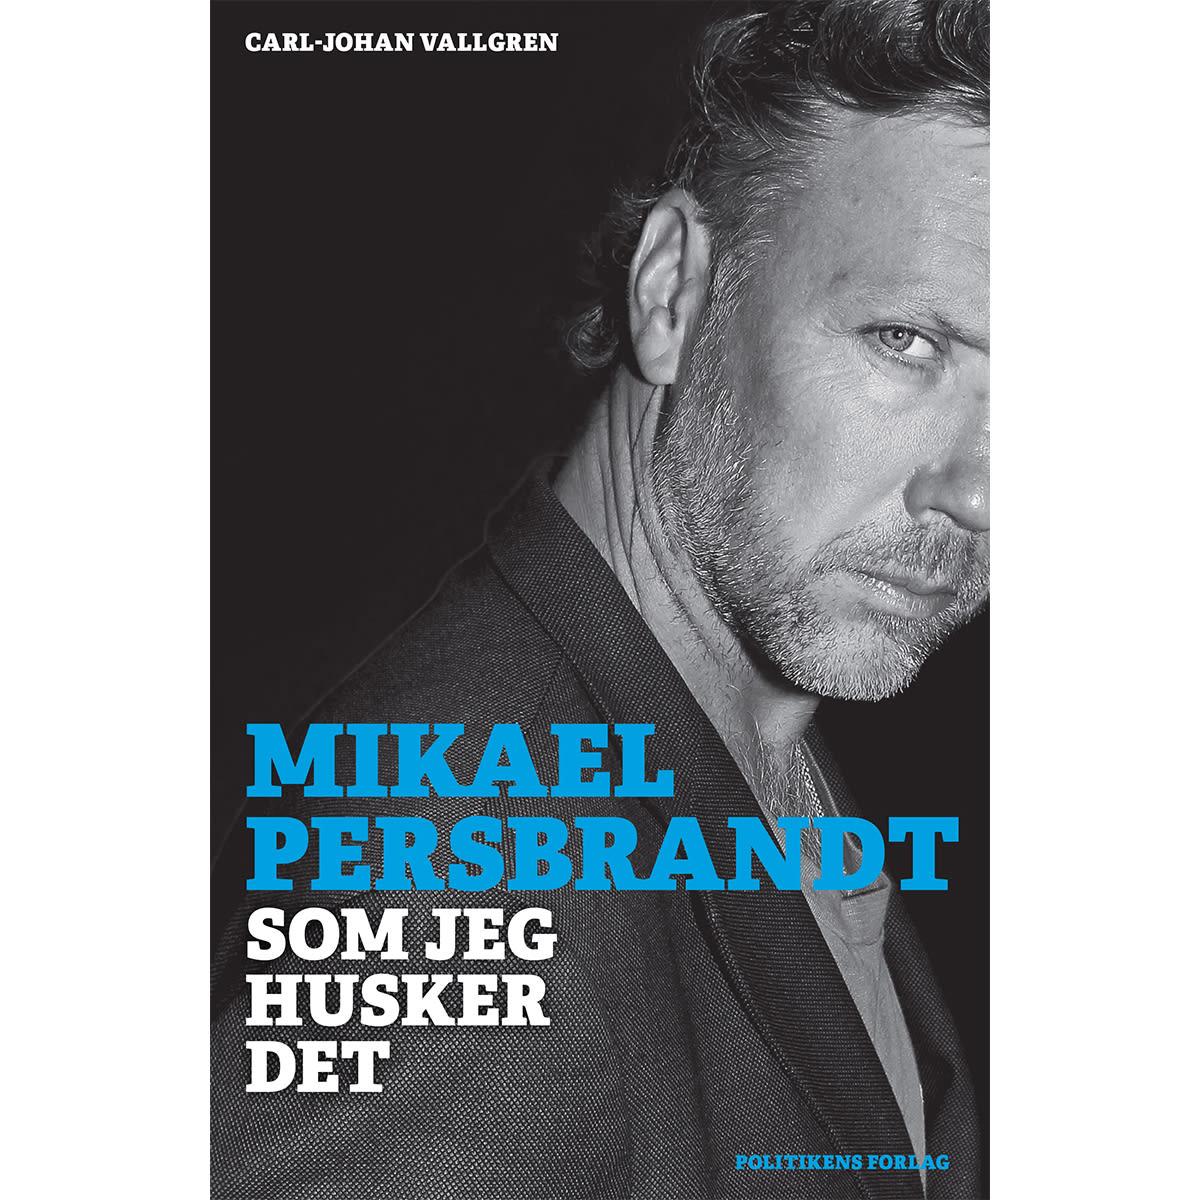 Af Carl-Johan Vallgren & Mikael Persbrandt